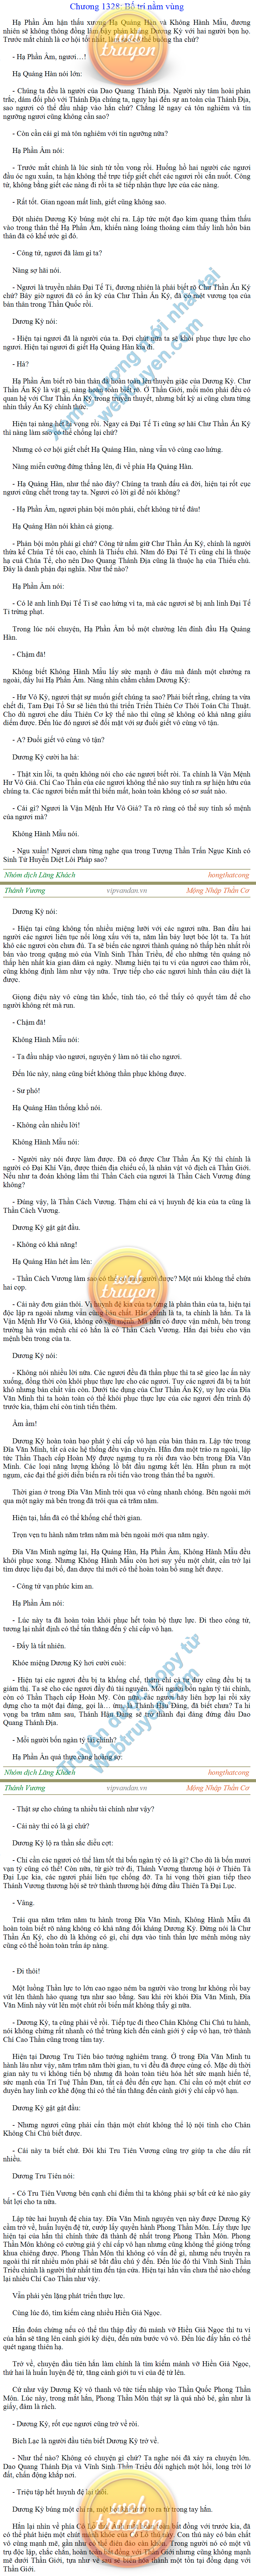 Thanh-vuong-1328.png